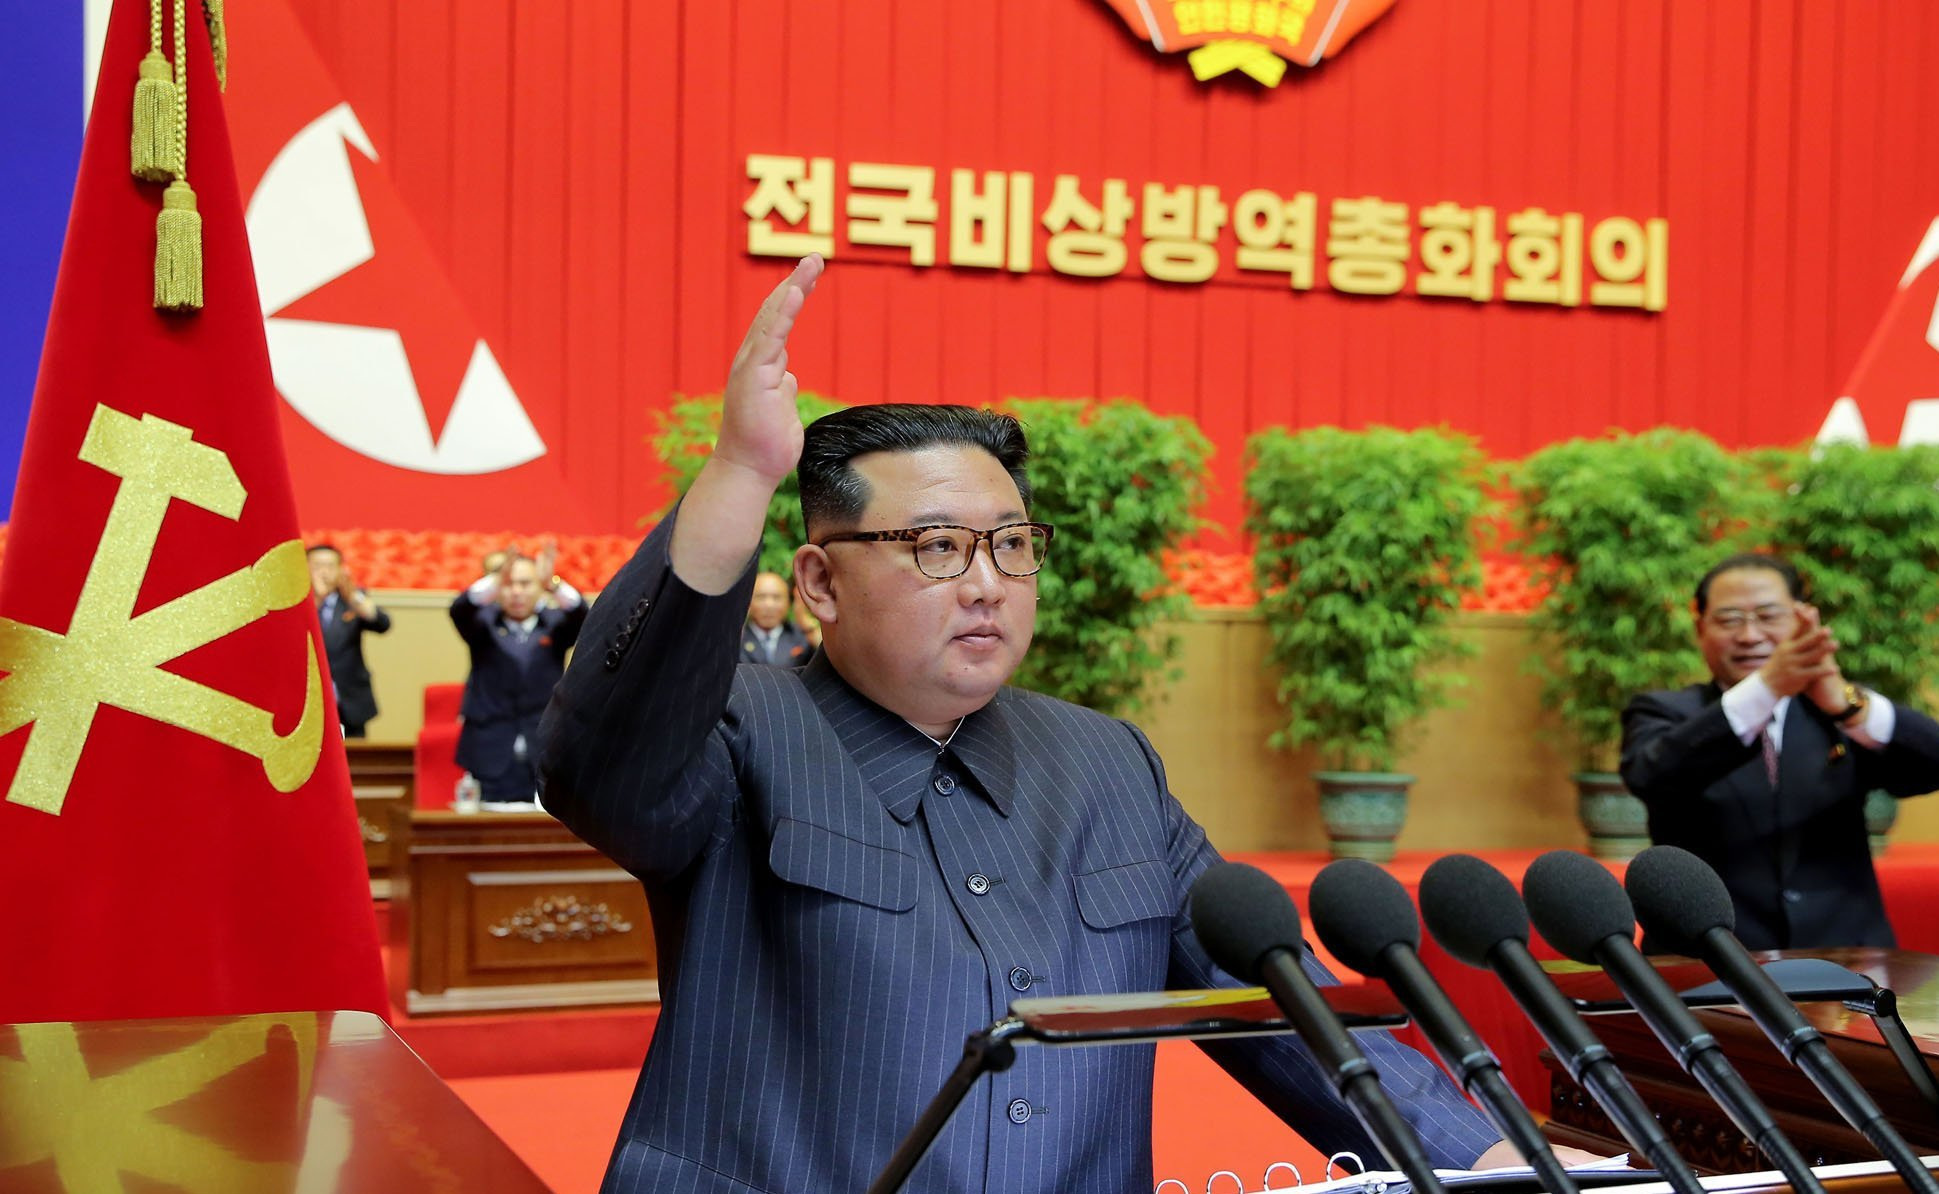 Corea del Norte lanza un dron submarino pensado para "crear un tsunami radioactivo"